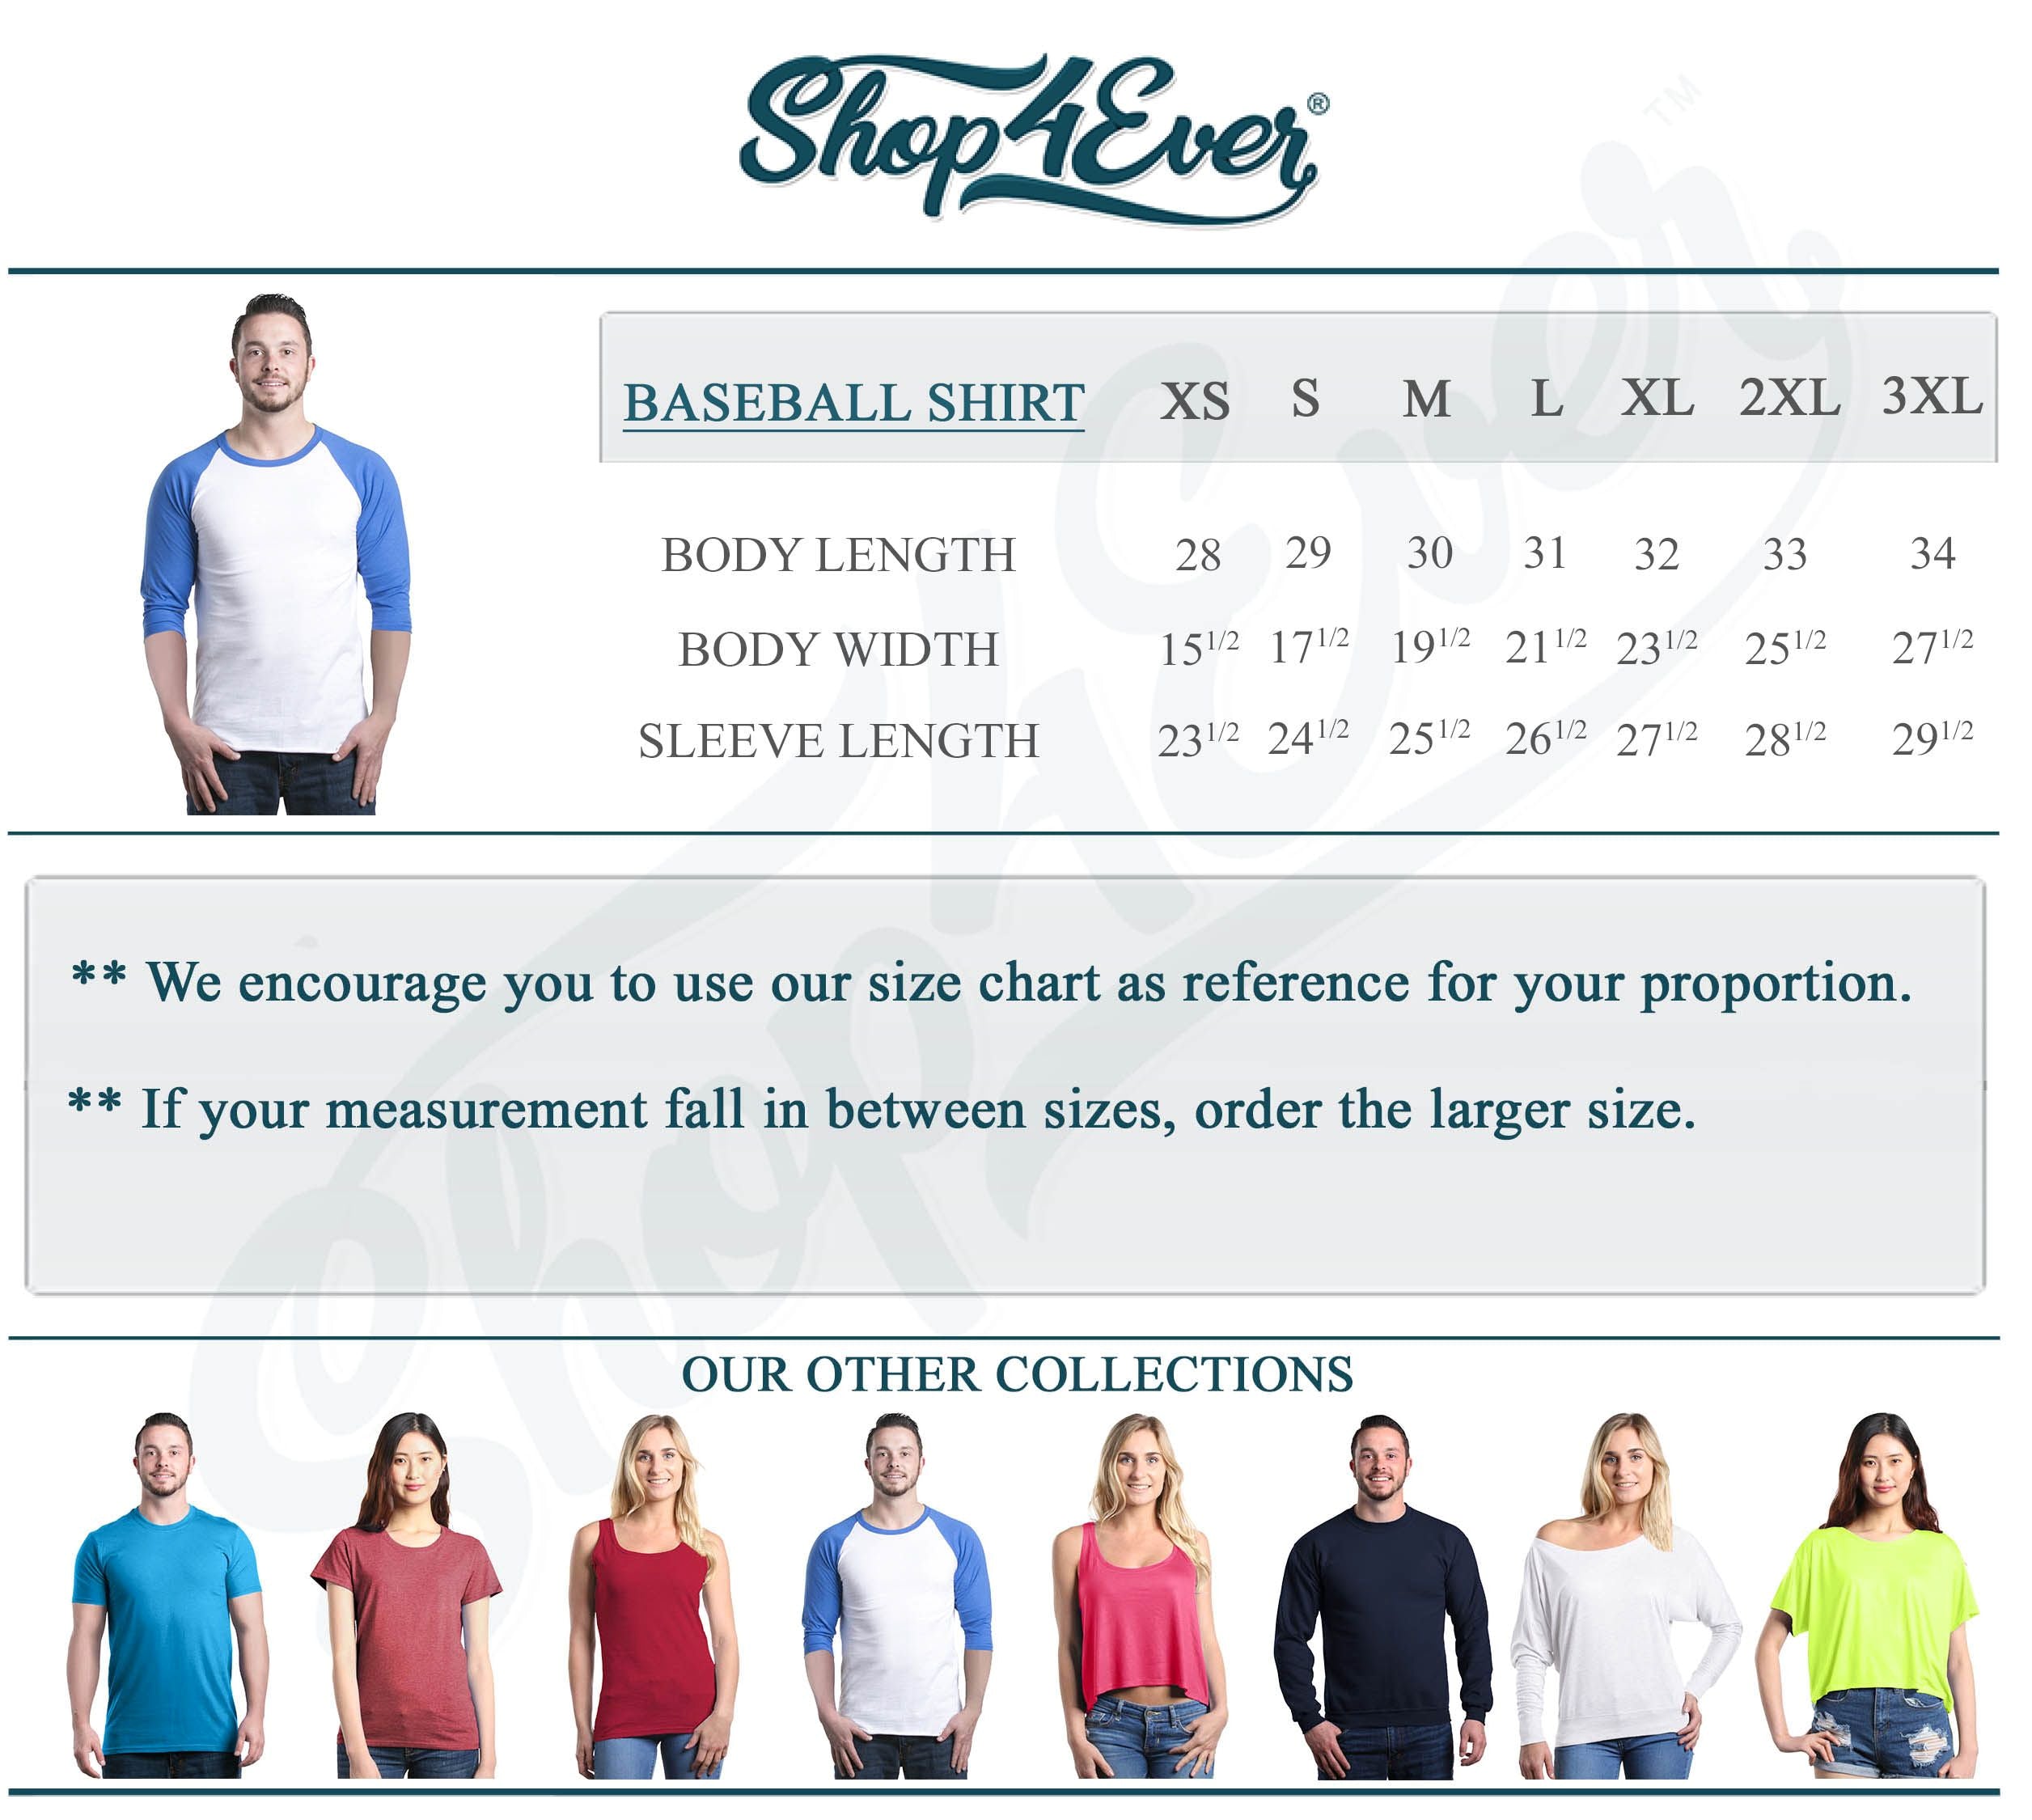 Tackle Breast Cancer Baseball Shirt Support Awareness Raglan Baseball Shirt